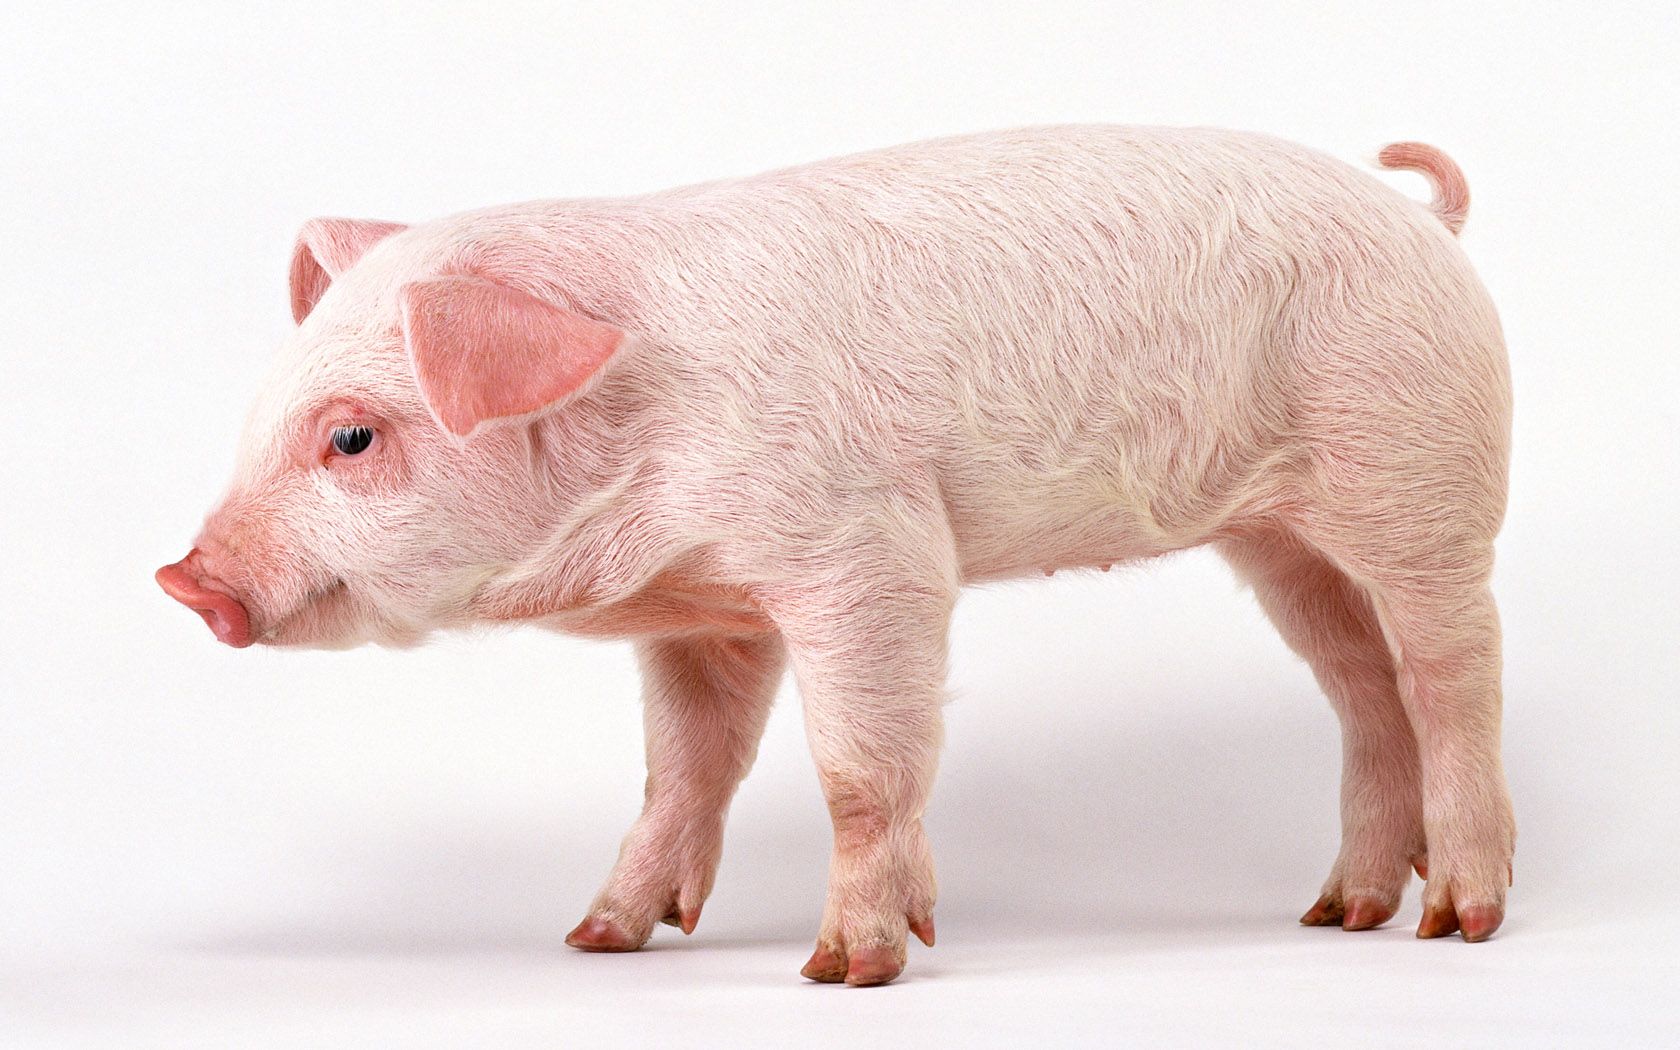 pig wallpaper hd,domestic pig,suidae,snout,livestock,pink